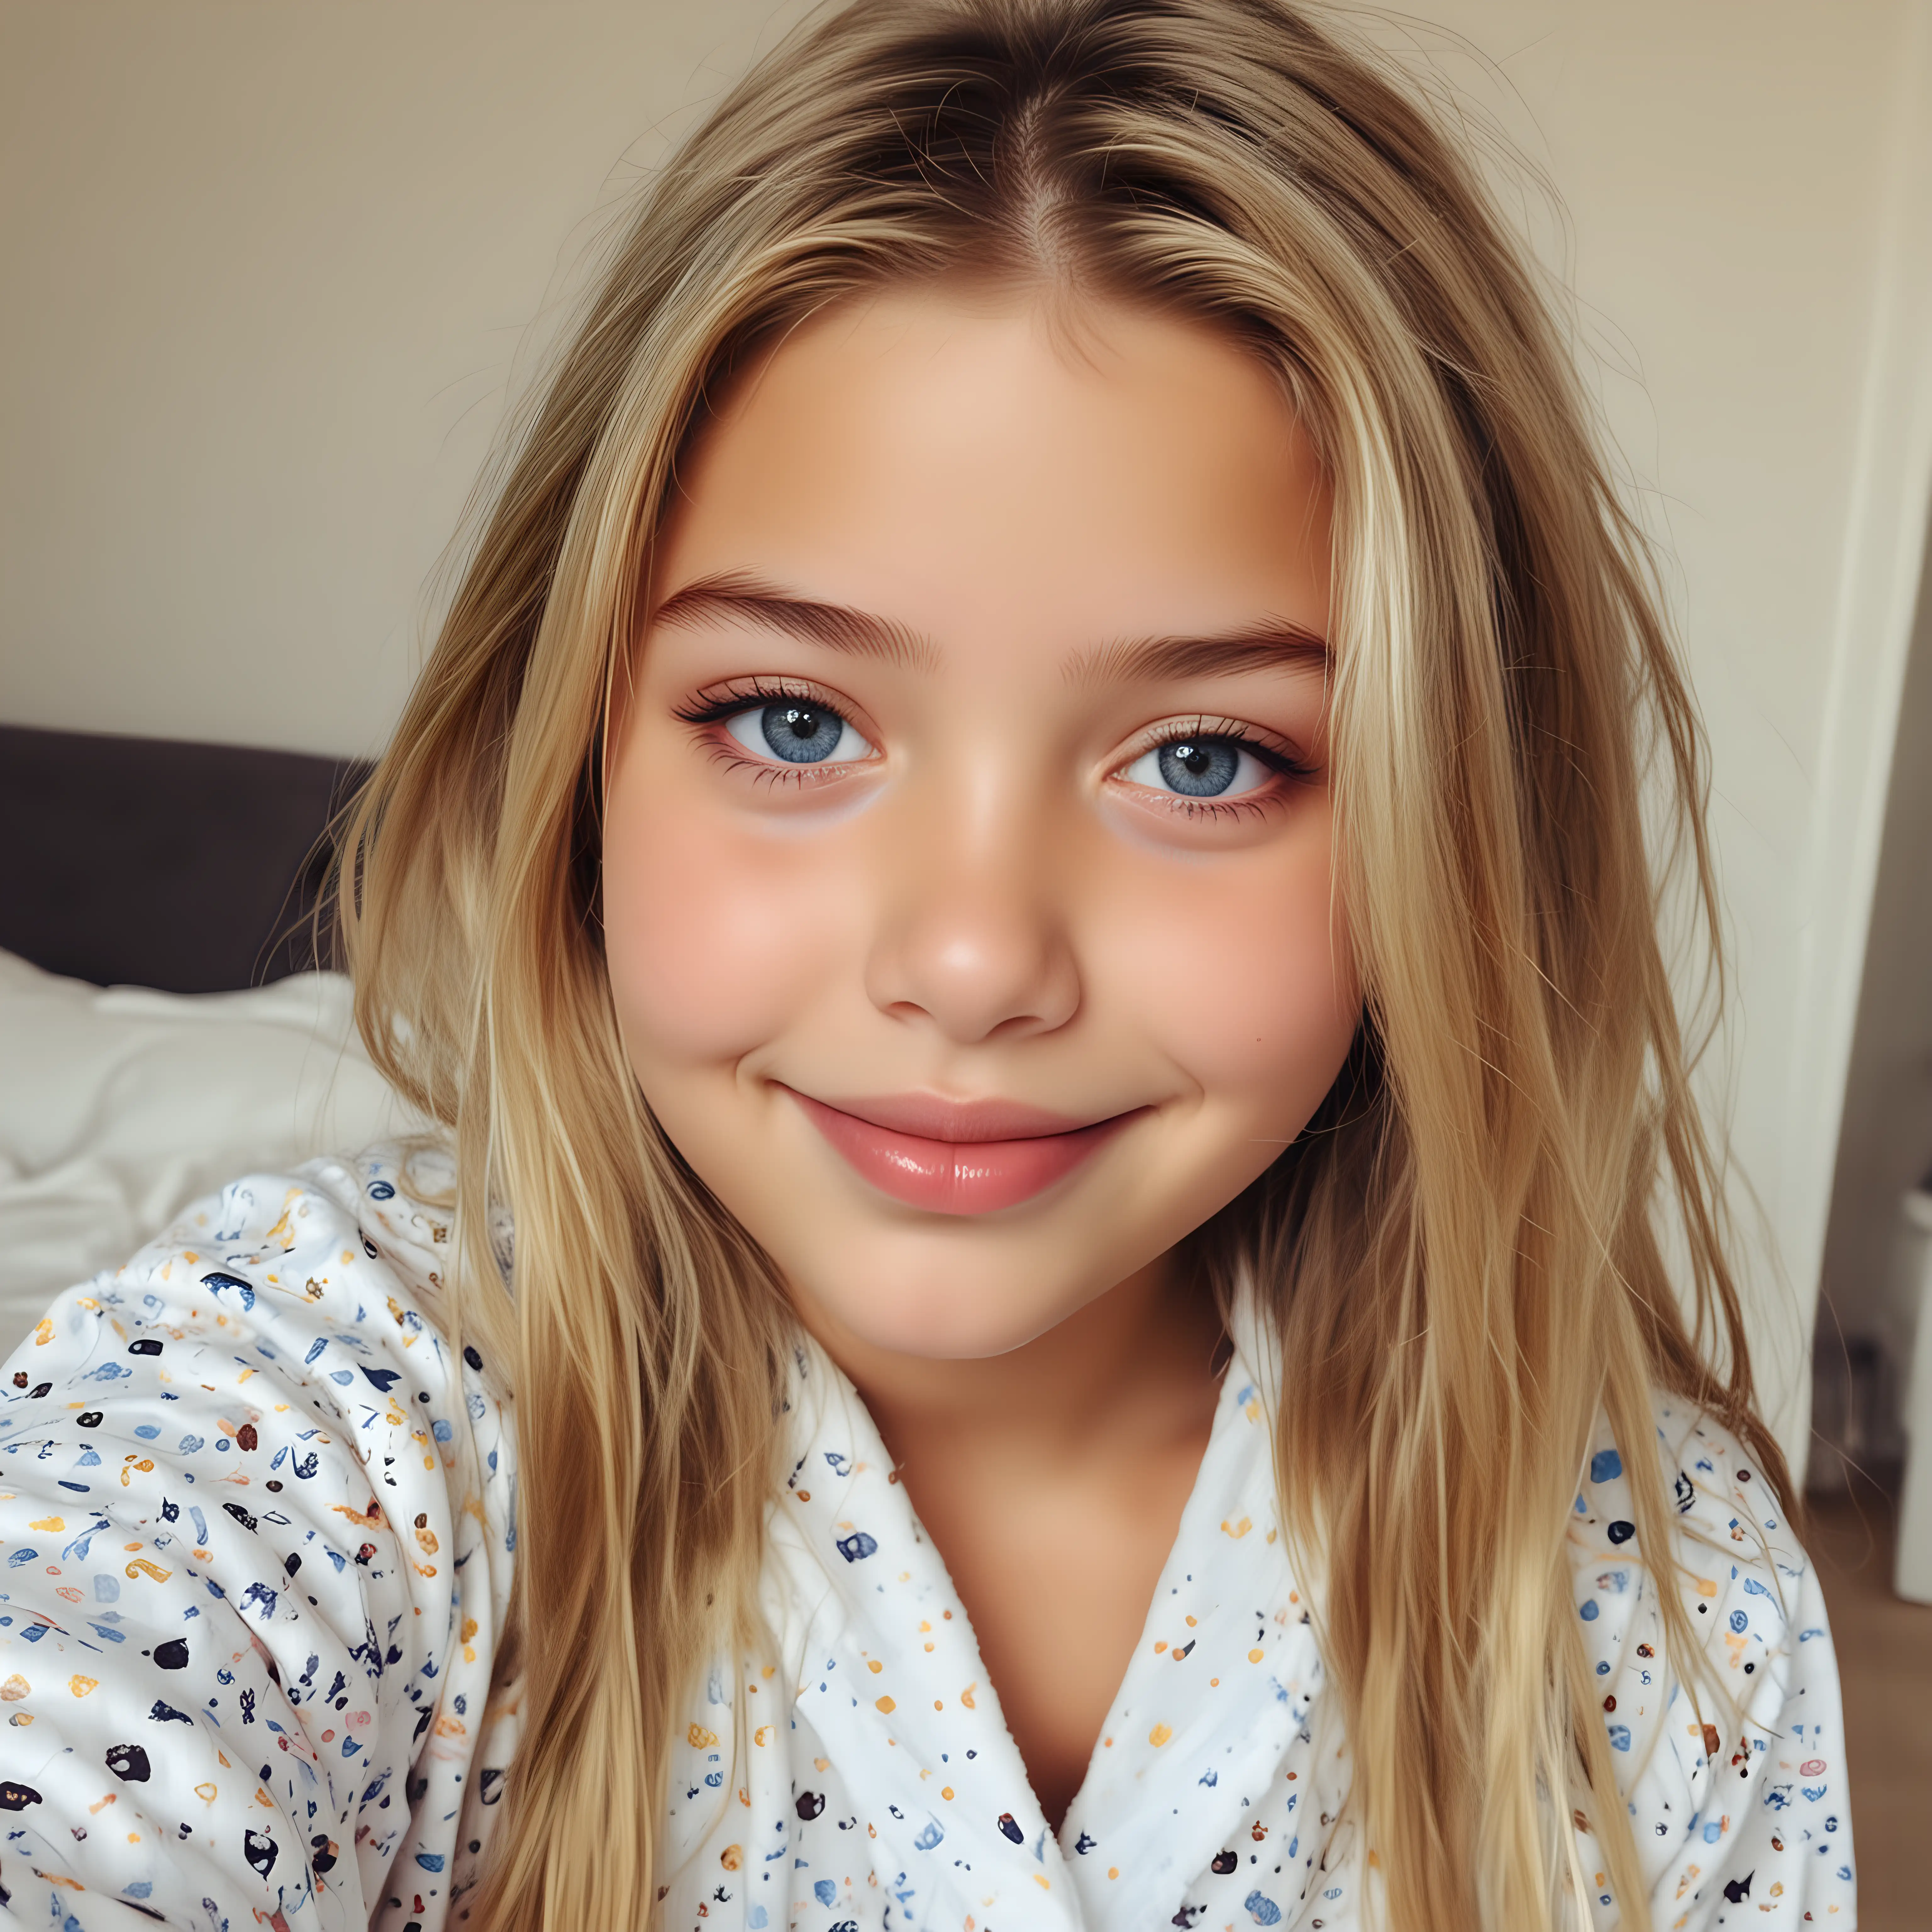 Adorable 13YearOld French Girl Selfie in Cute Pajamas